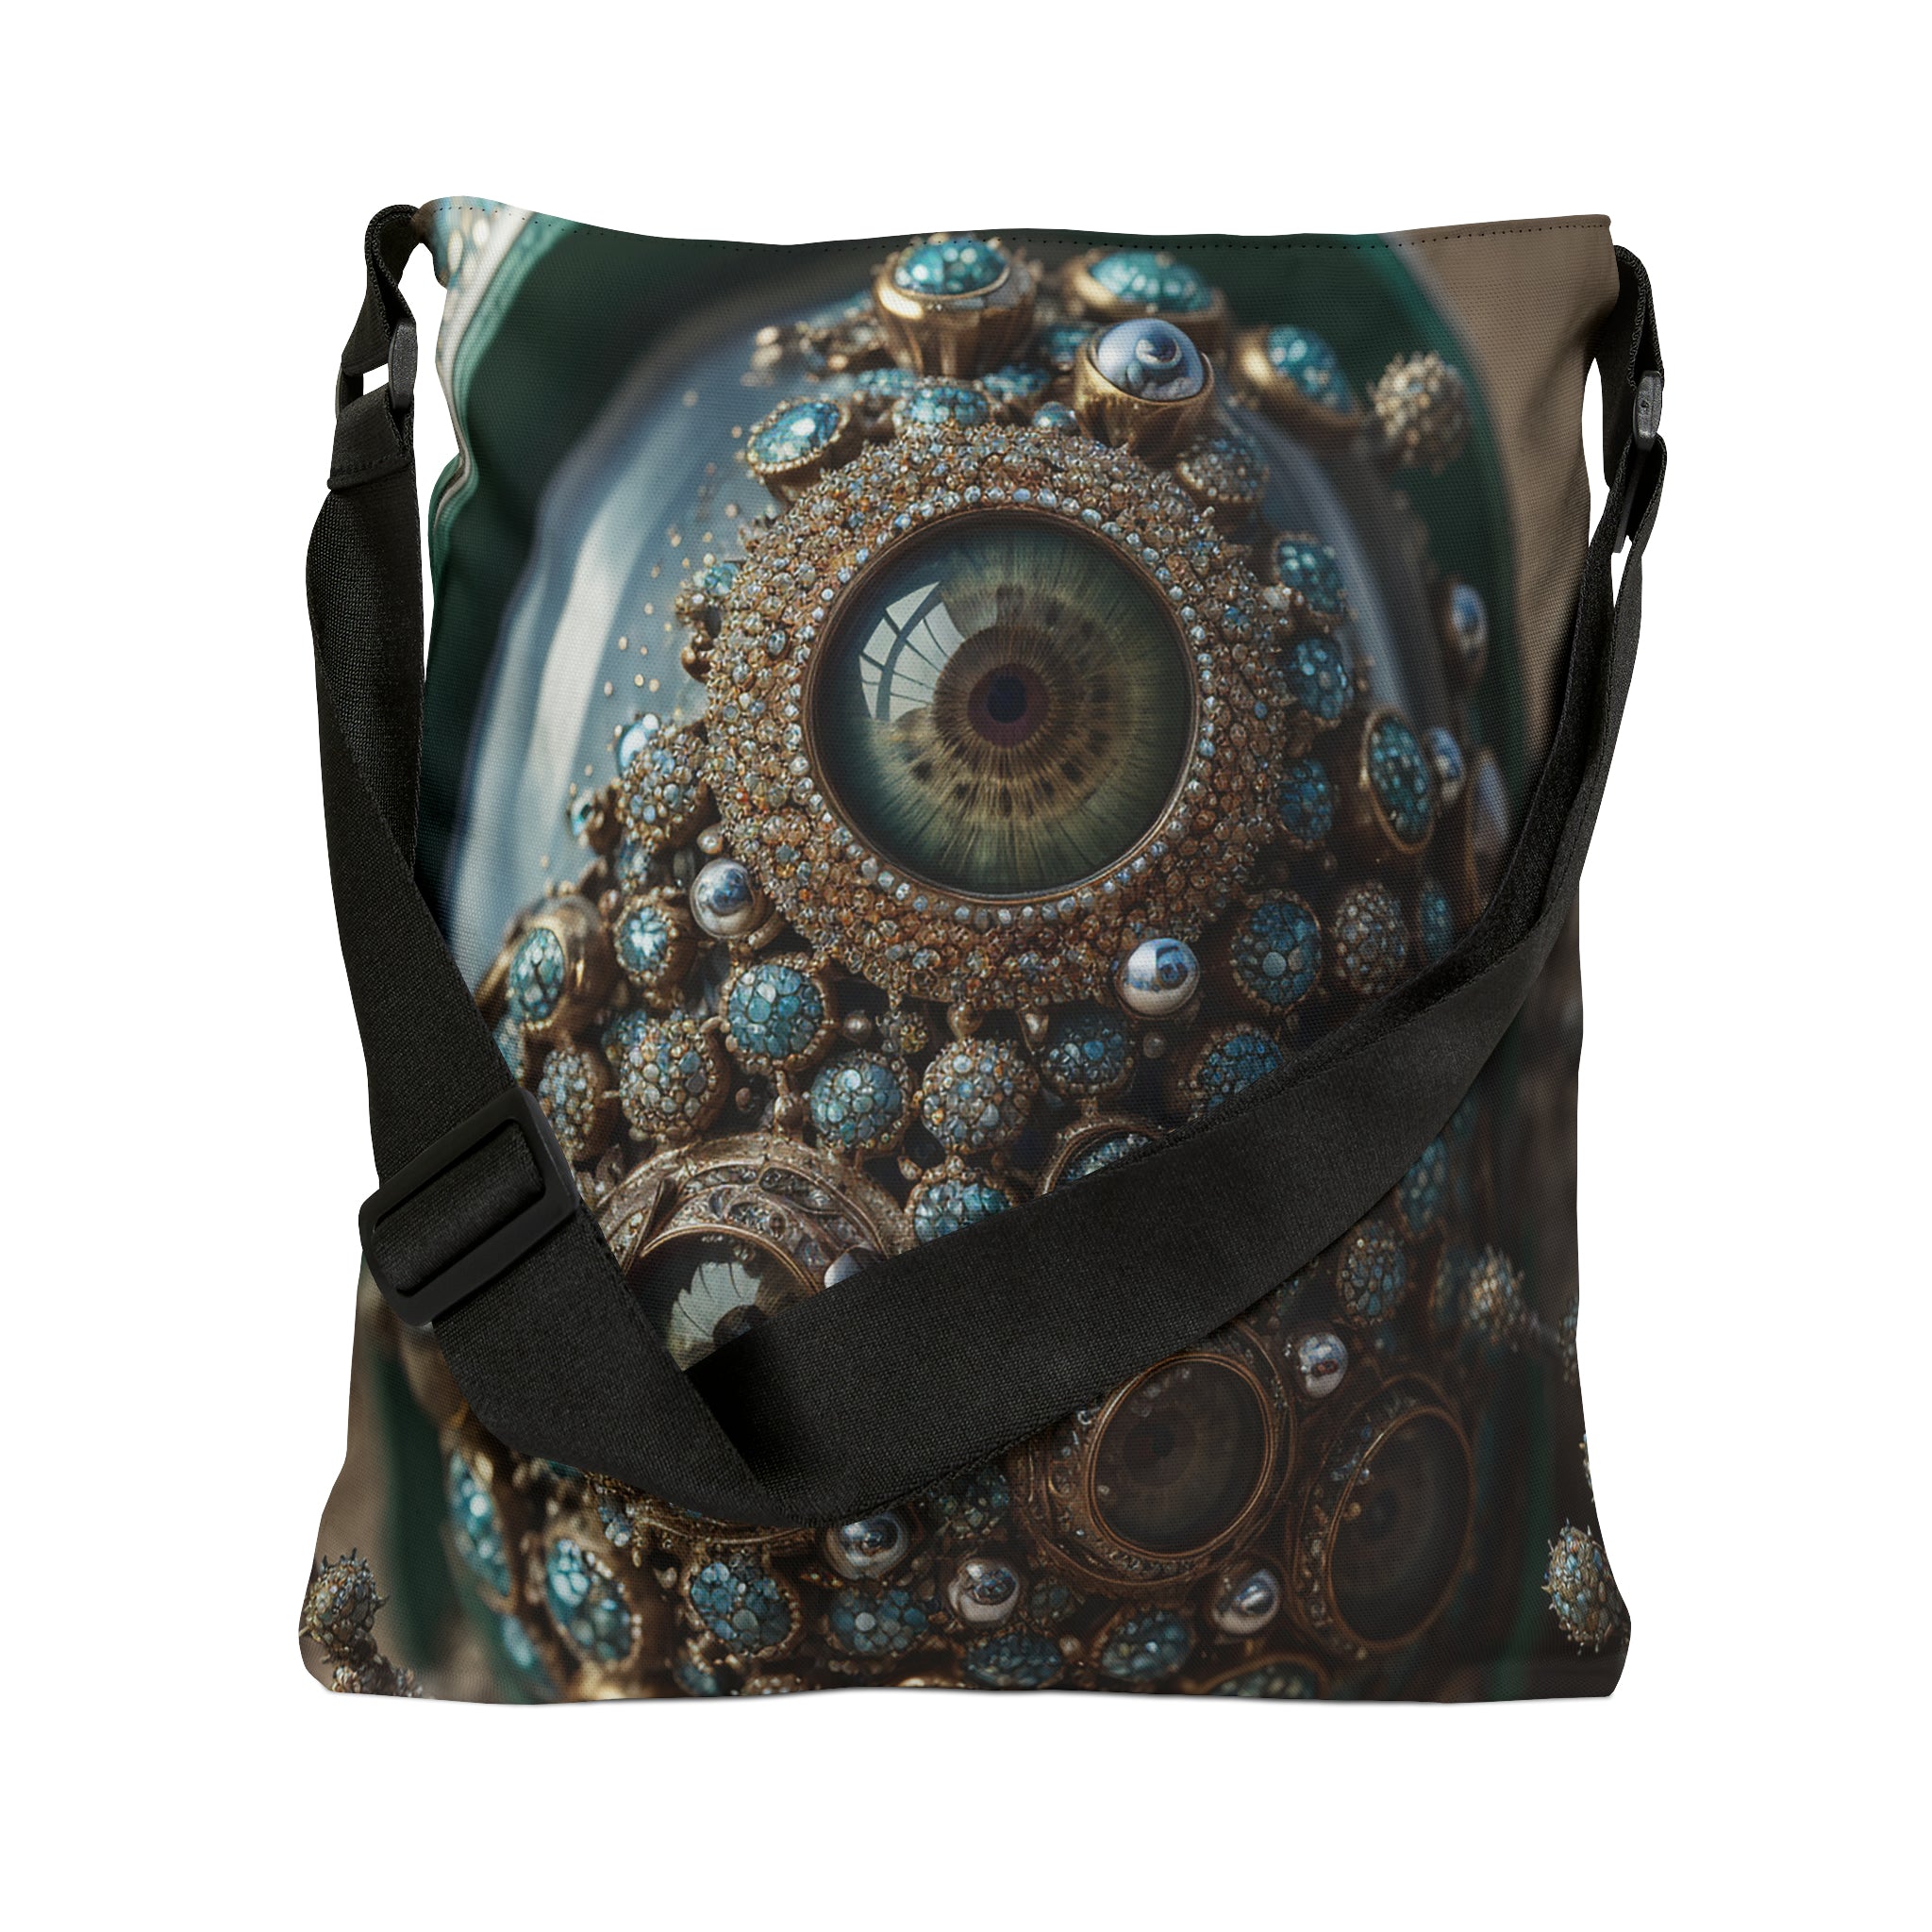 Turquoise Eyes - Adjustable Tote Bag